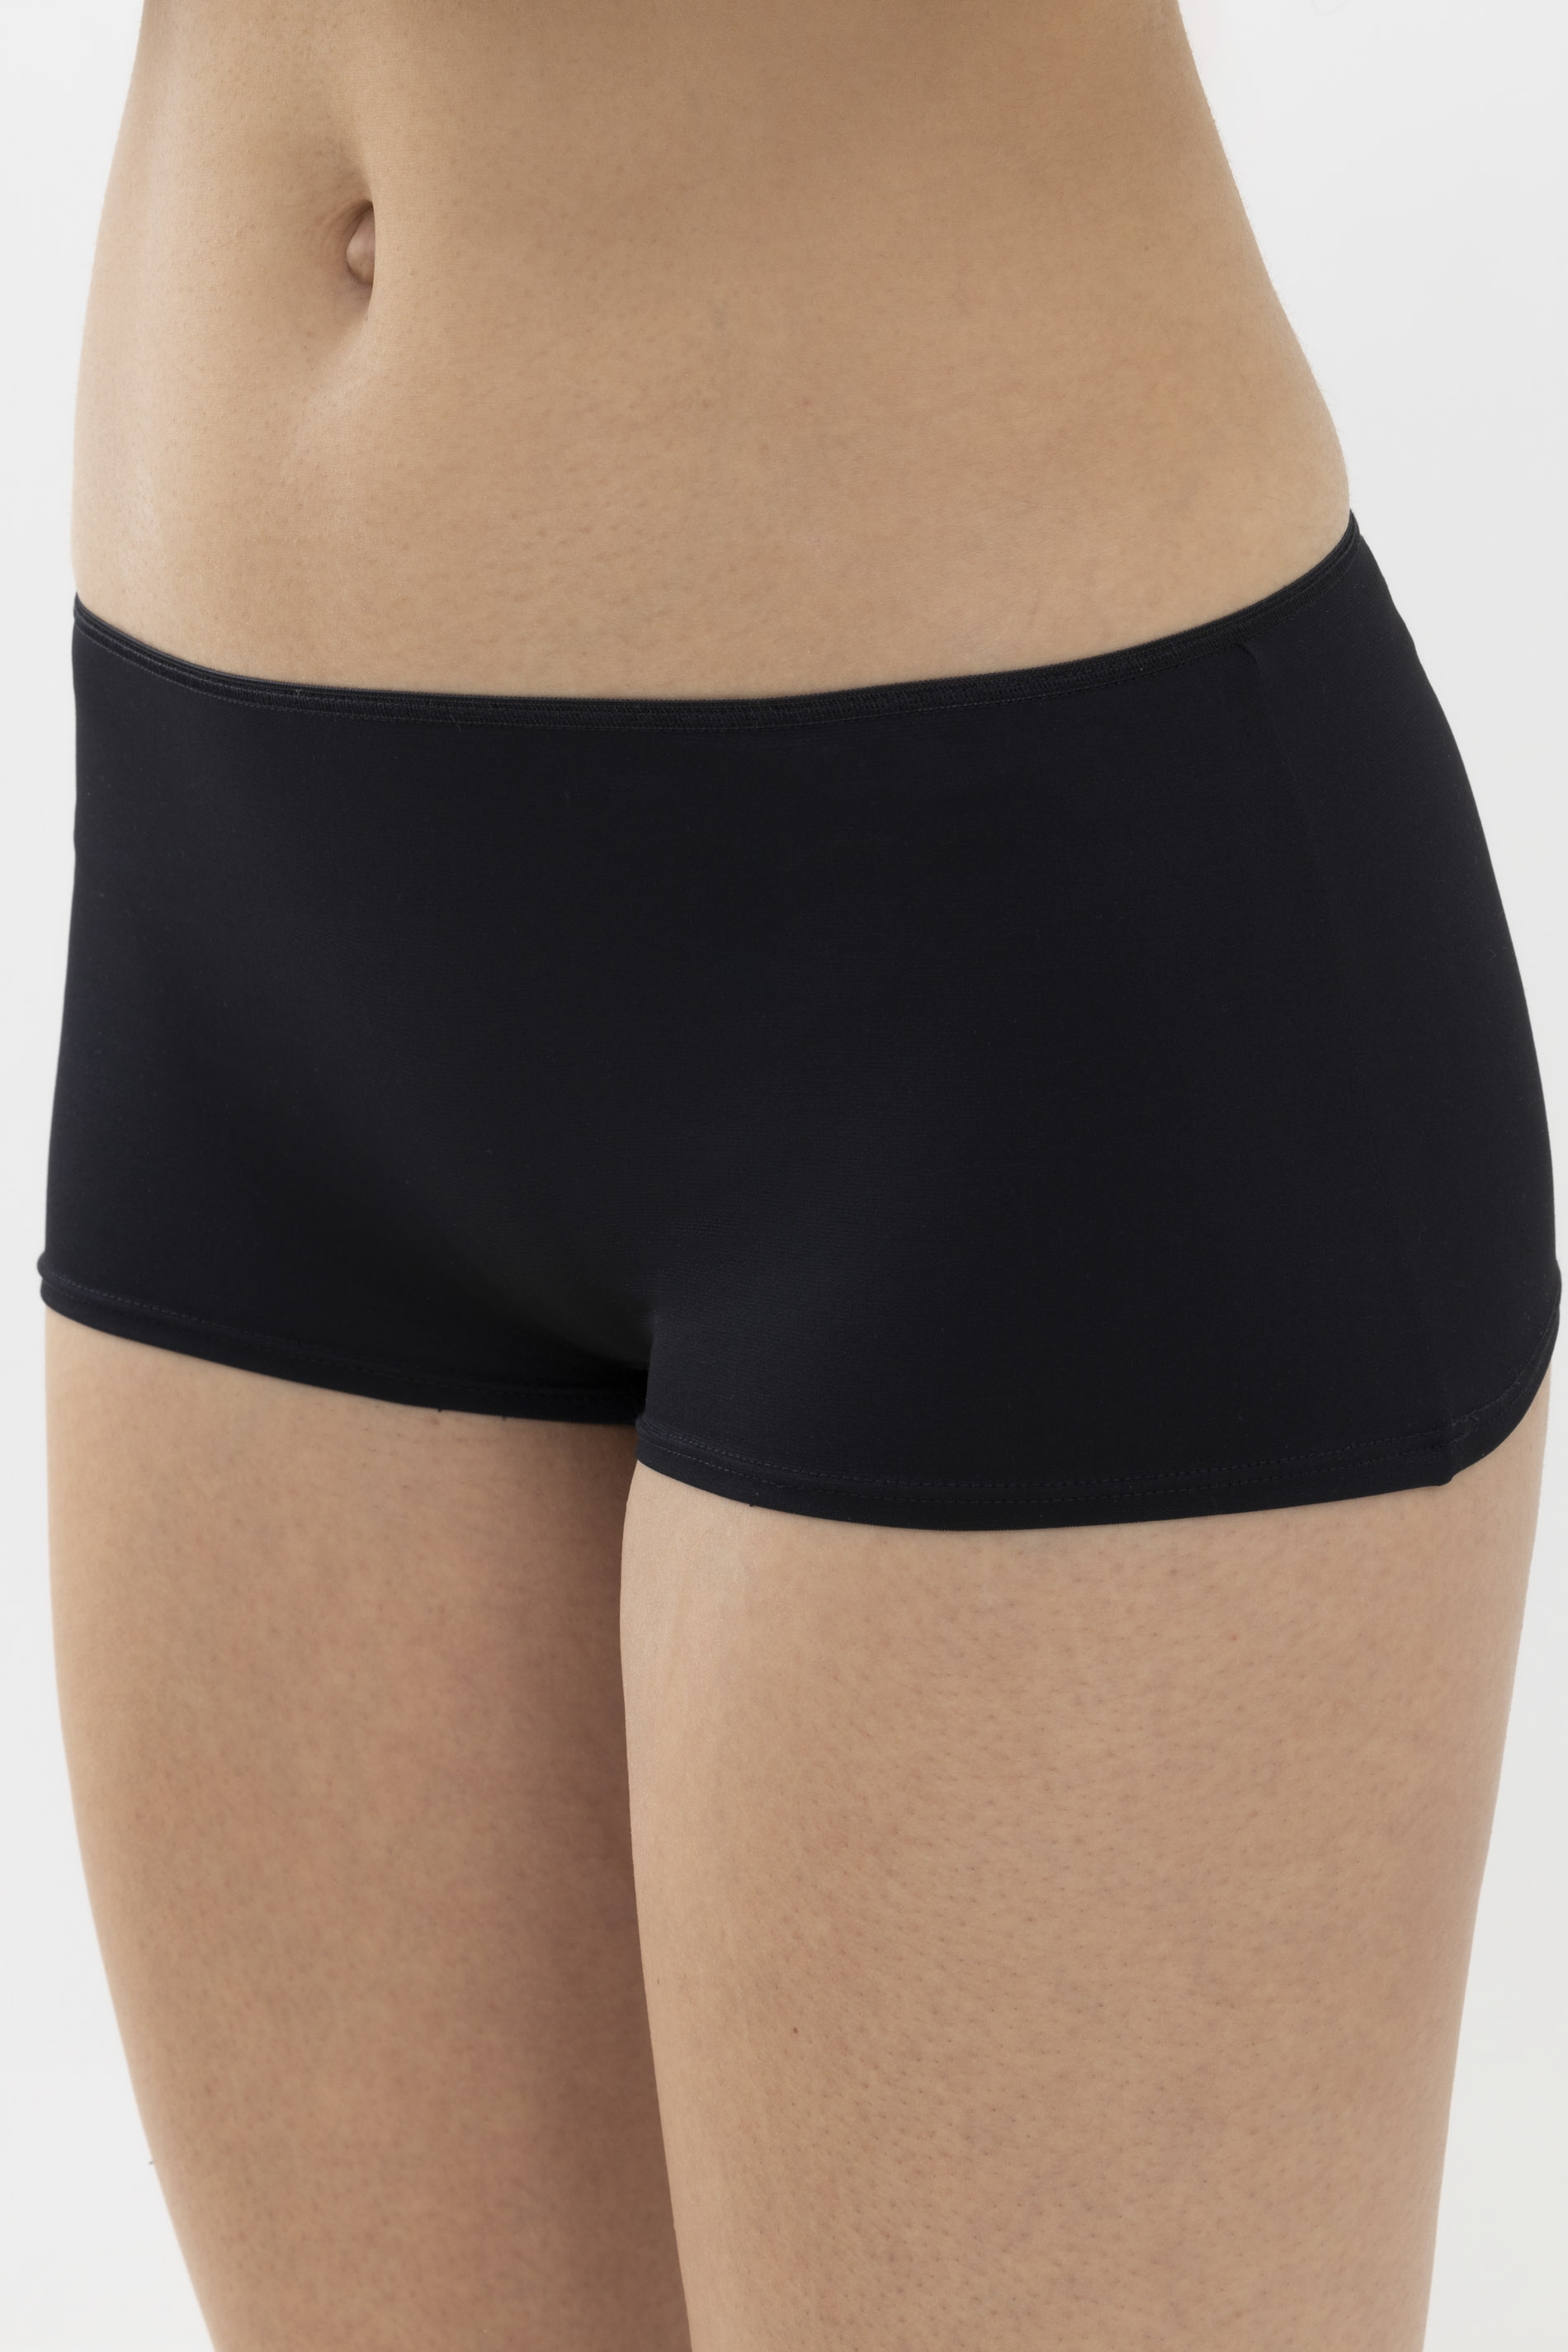 Panty Black Serie Soft Shape Detail View 02 | mey®